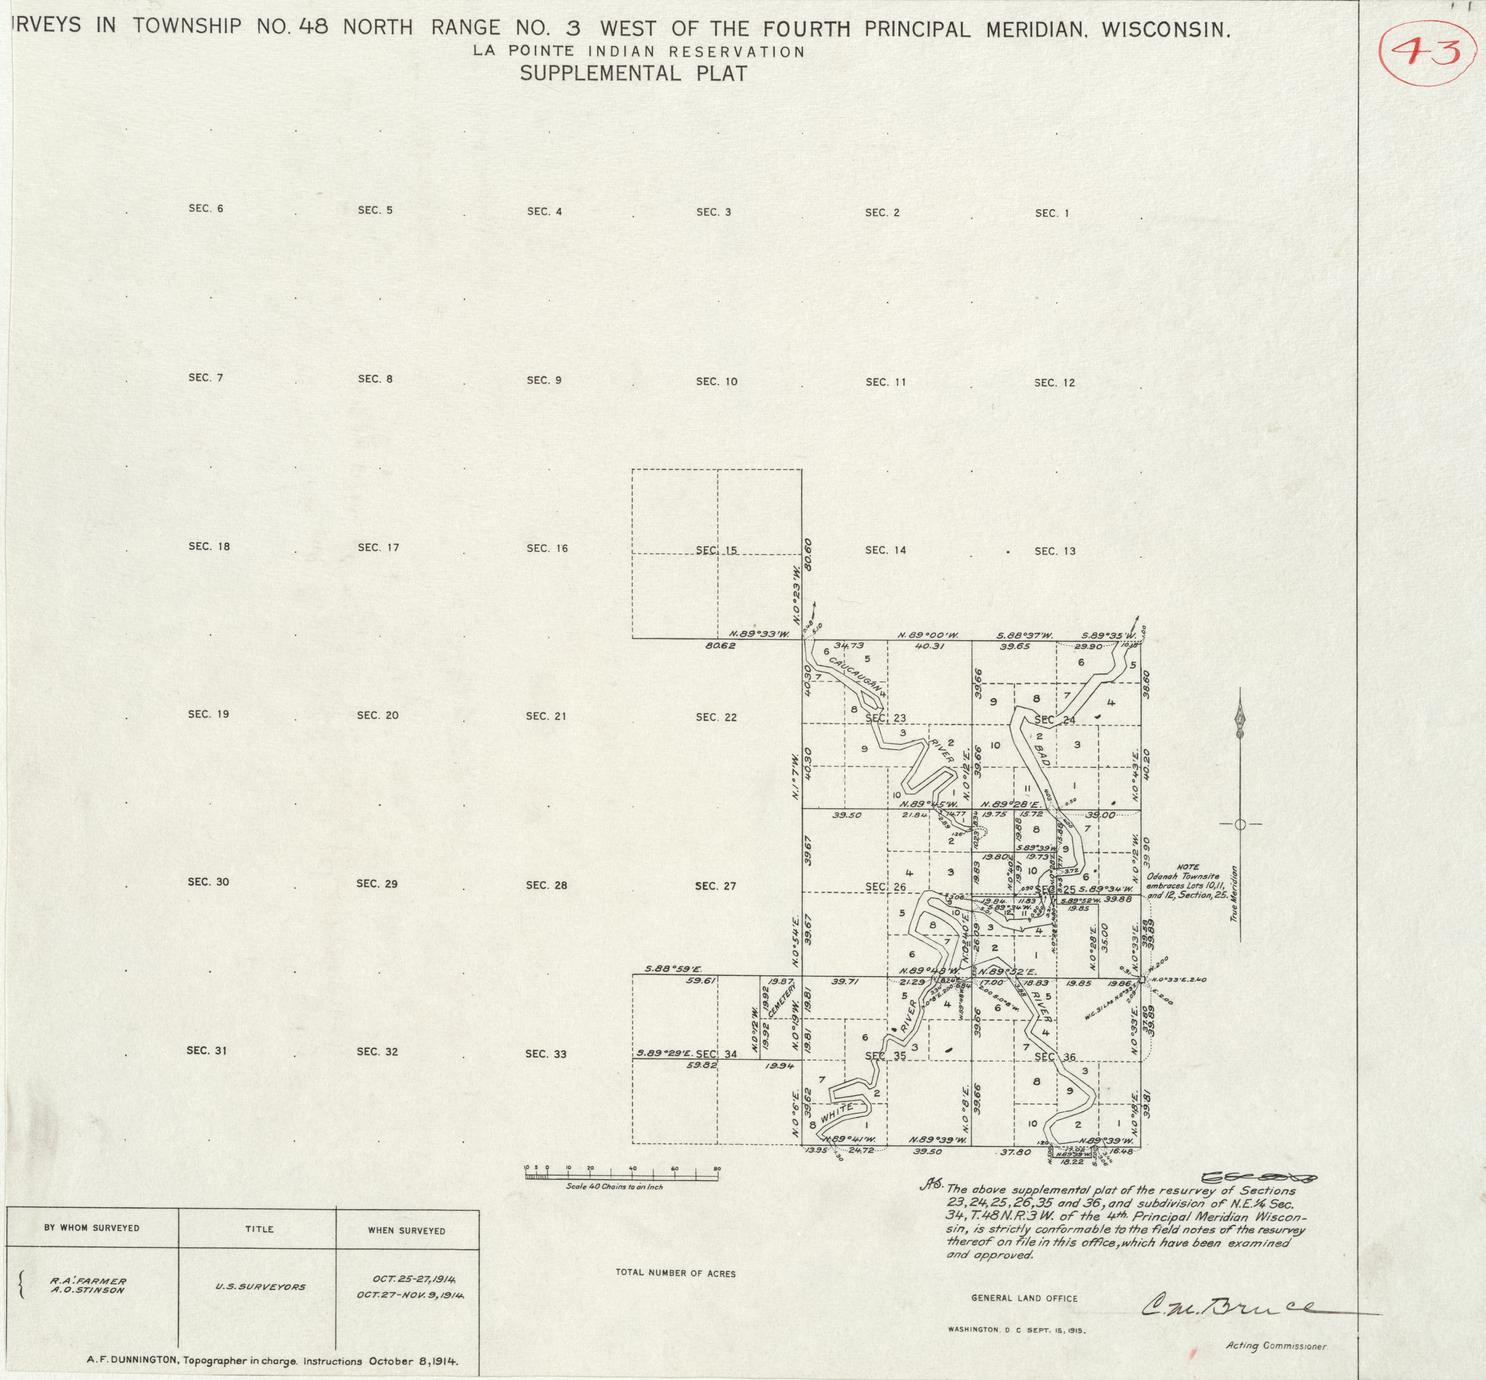 [Public Land Survey System map: Wisconsin Township 48 North, Range 03 West]